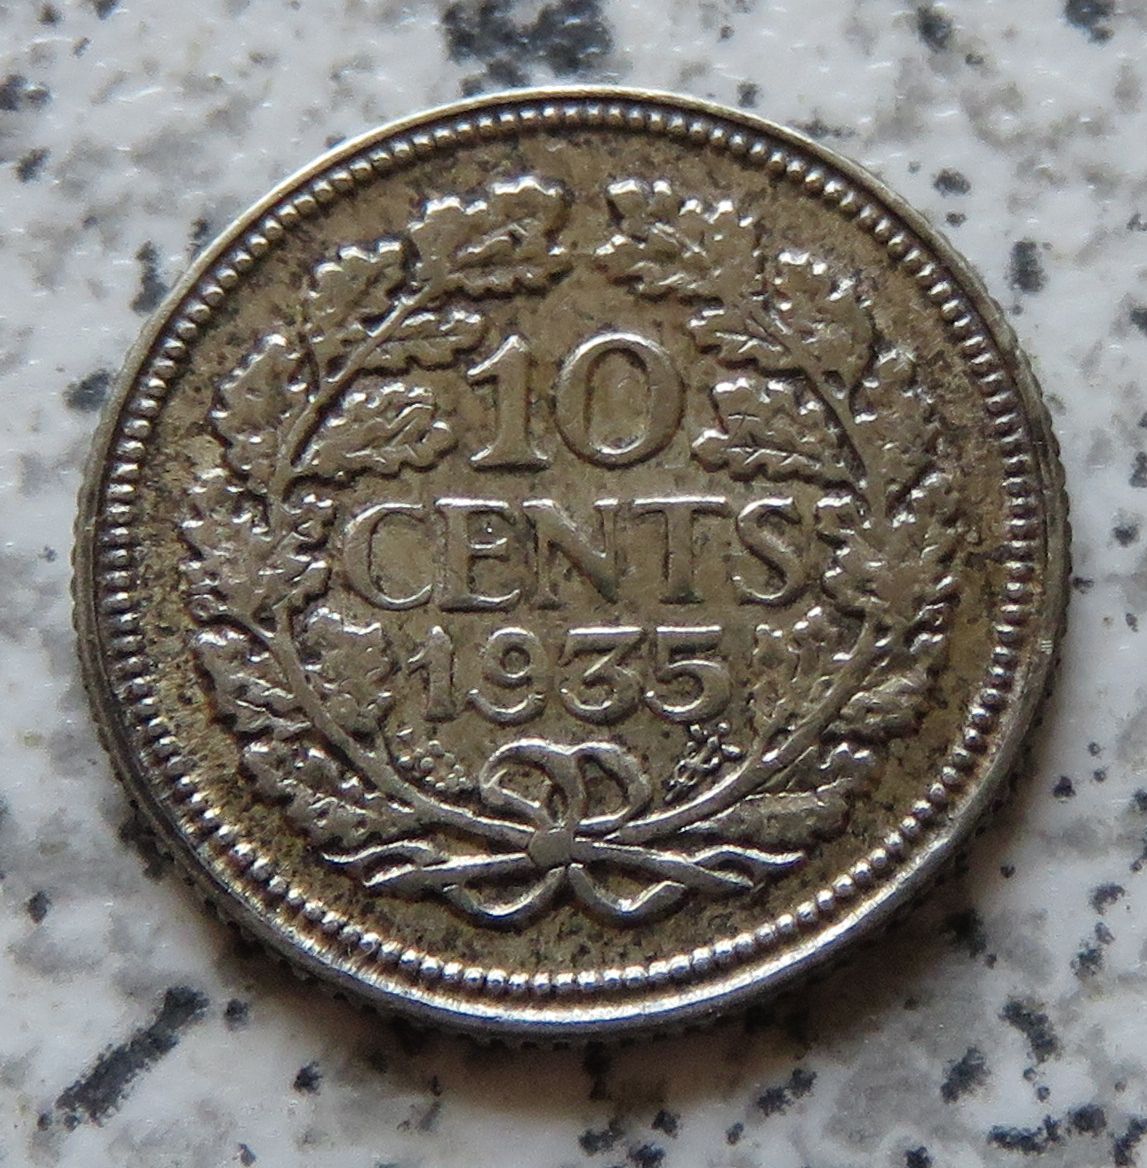  Niederlande 10 Cents 1935   